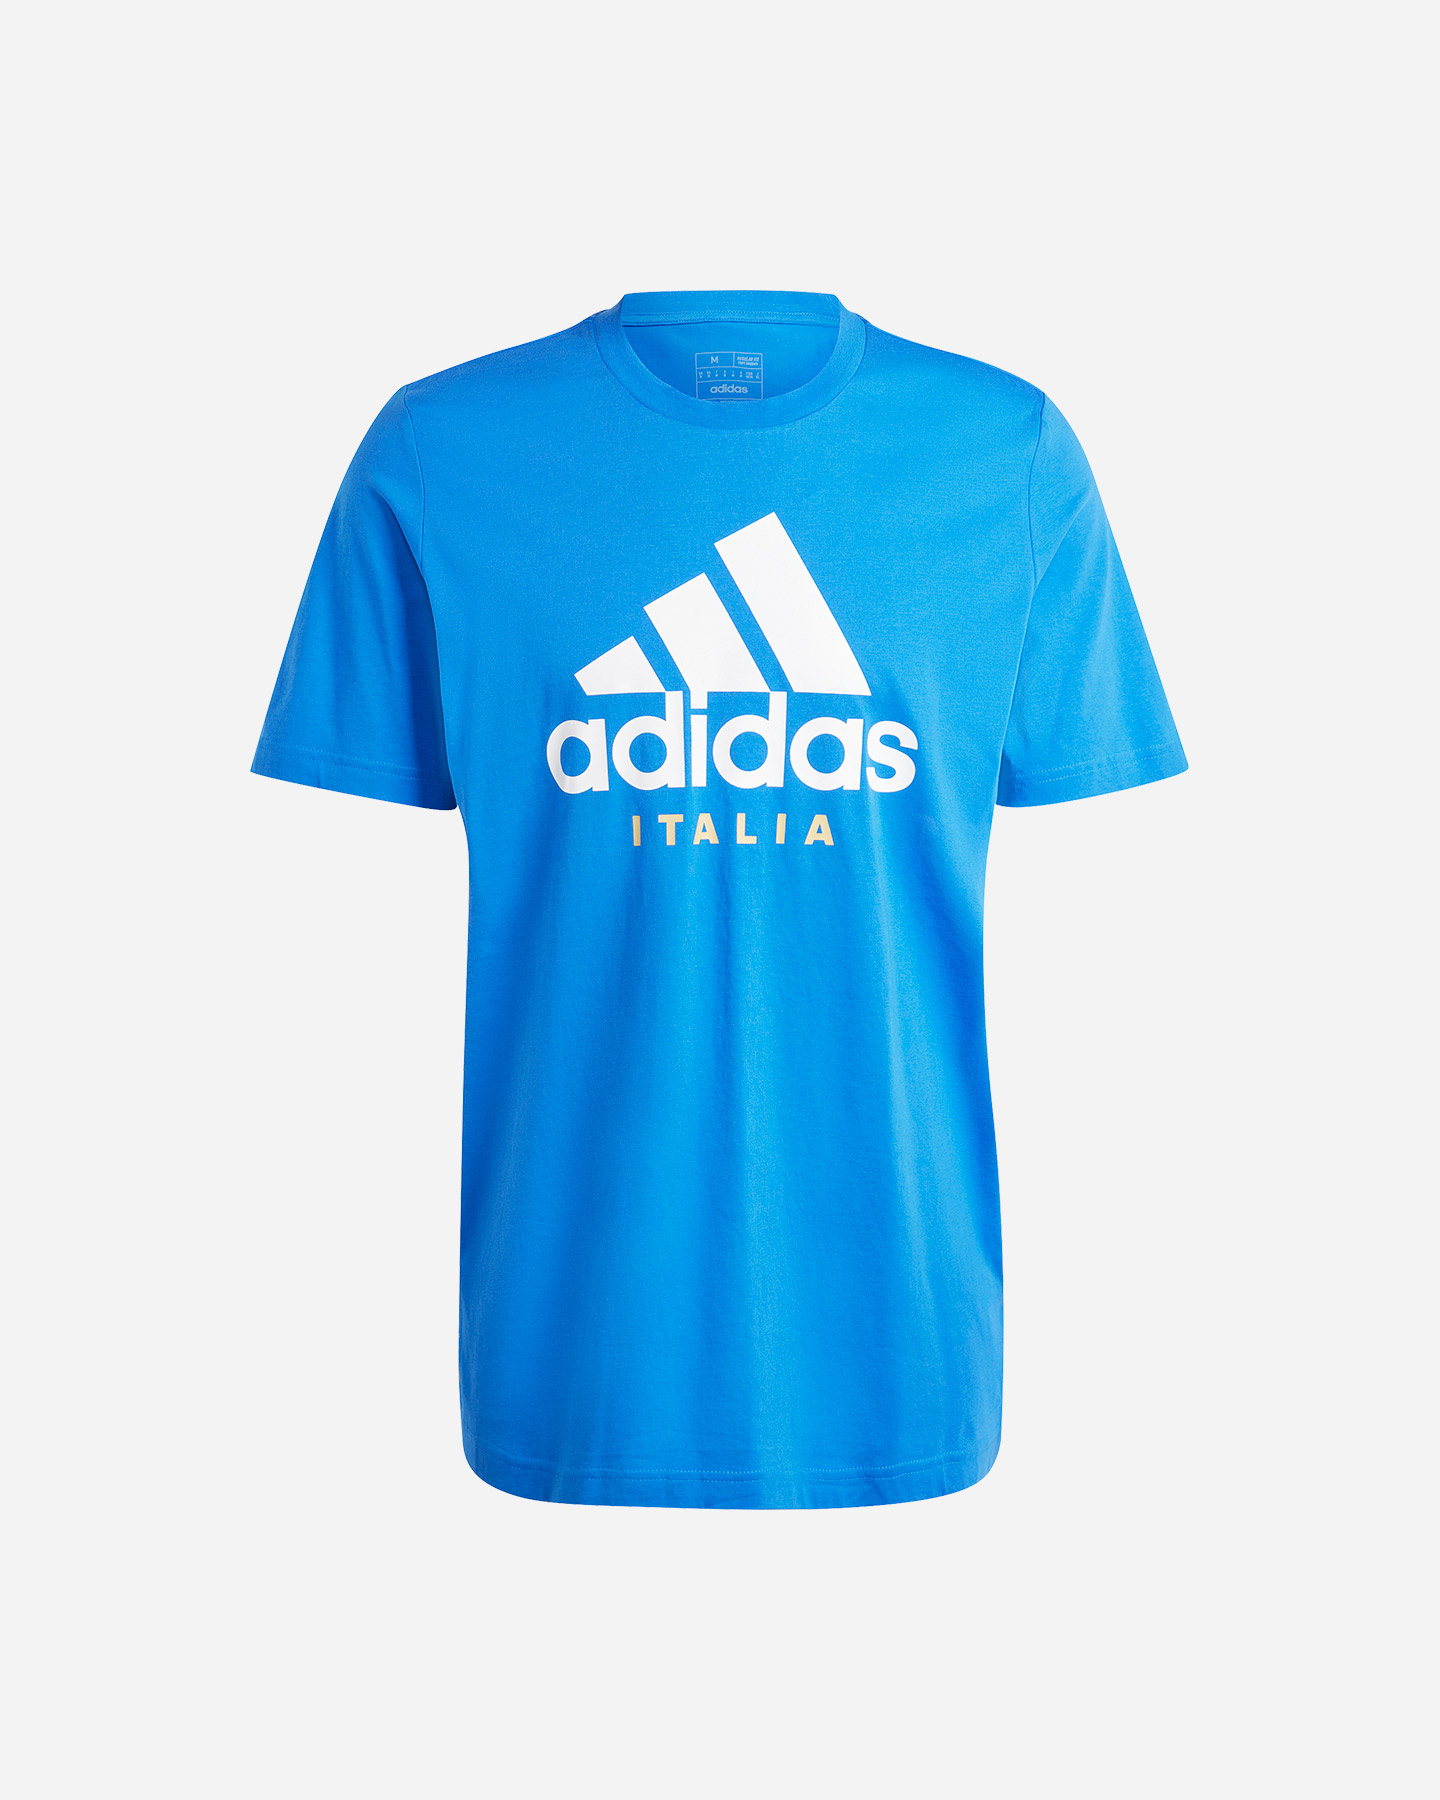 Image of Adidas Italia Figc Dna M - Abbigliamento Calcio - Uomo